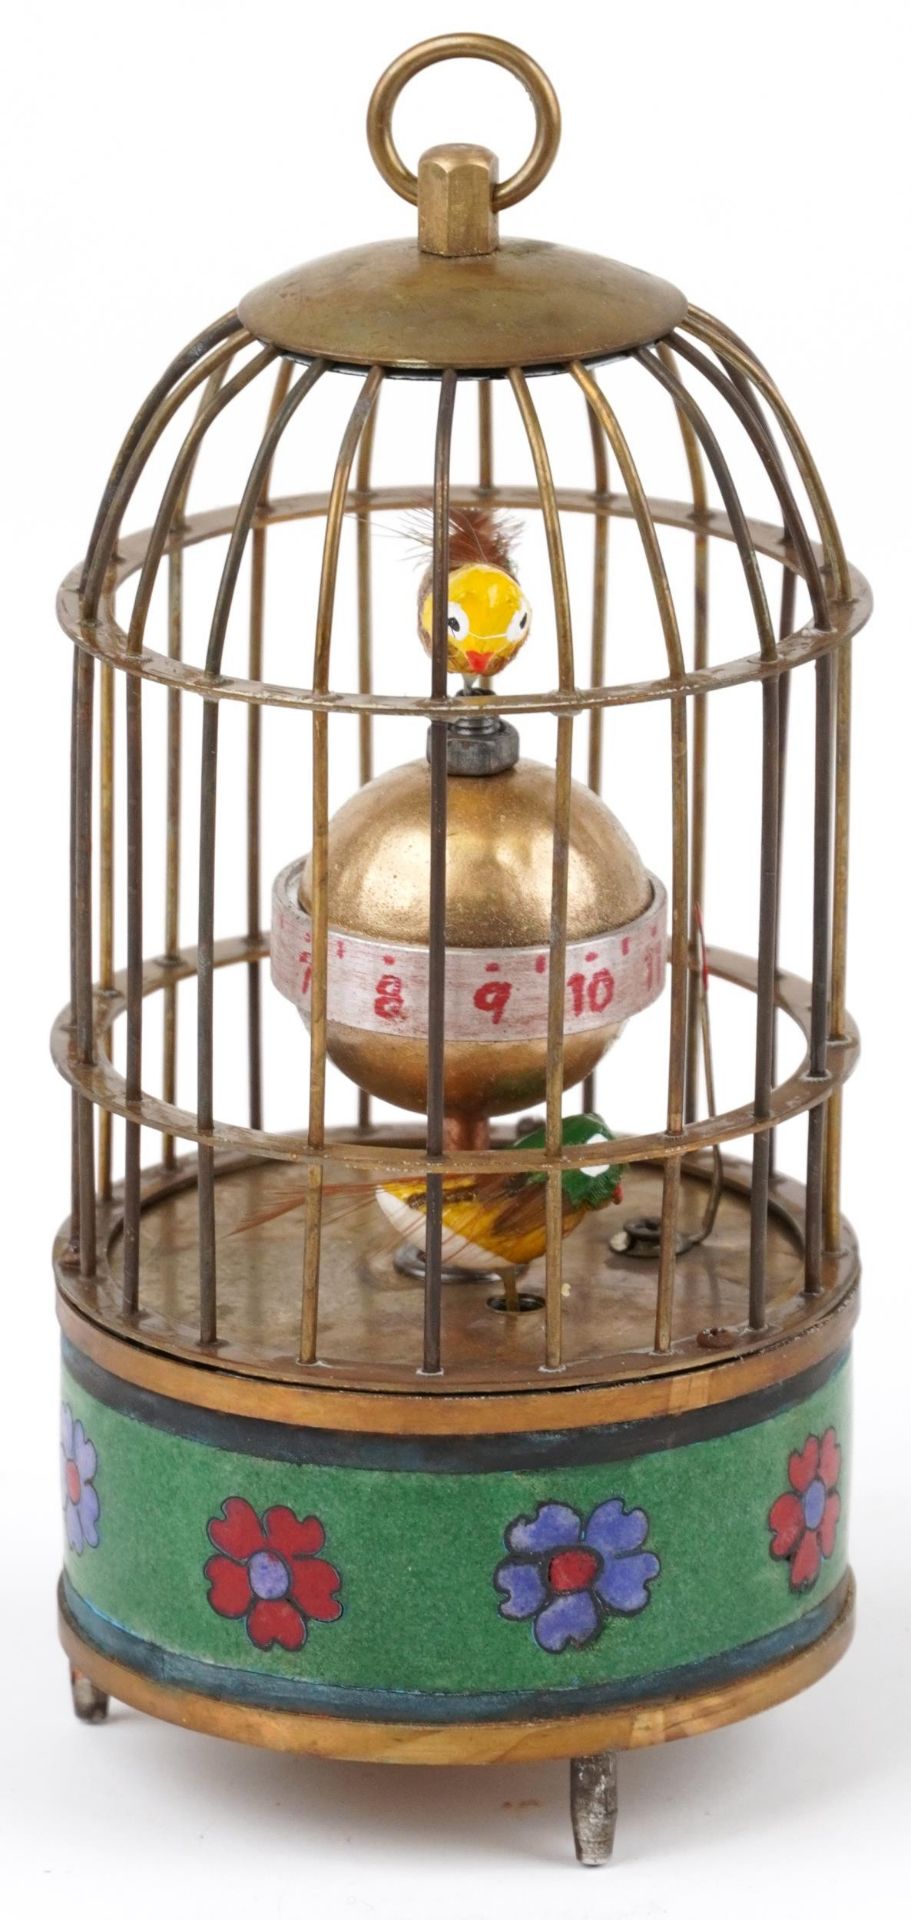 Clockwork automaton birdcage alarm clock with cloisonne band, 15.5cm high - Image 2 of 3